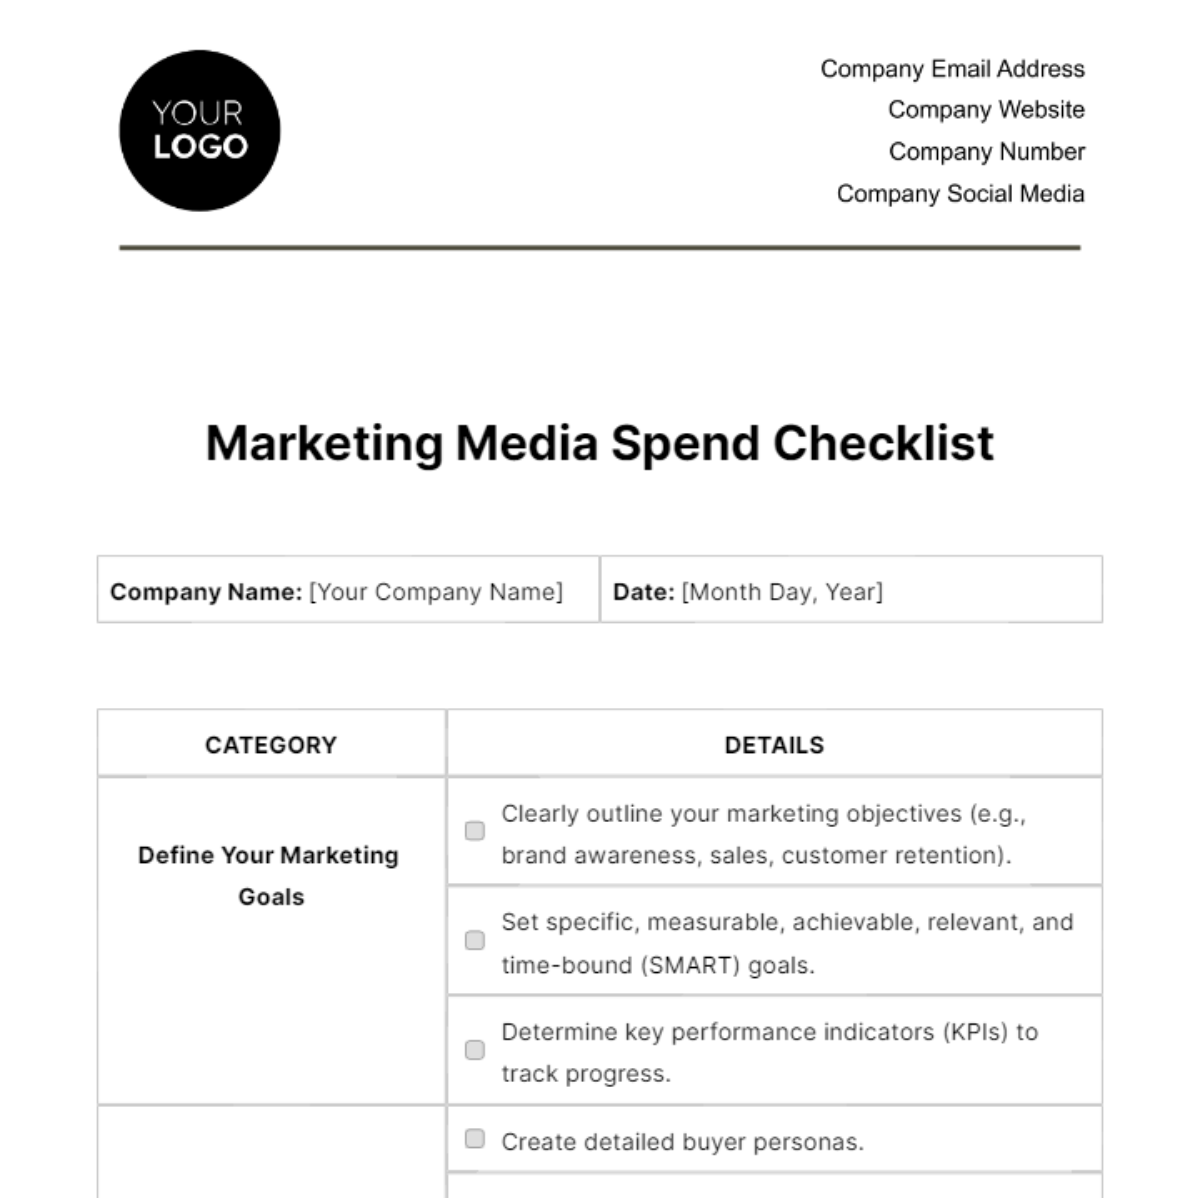 Free Marketing Media Spend Checklist Template